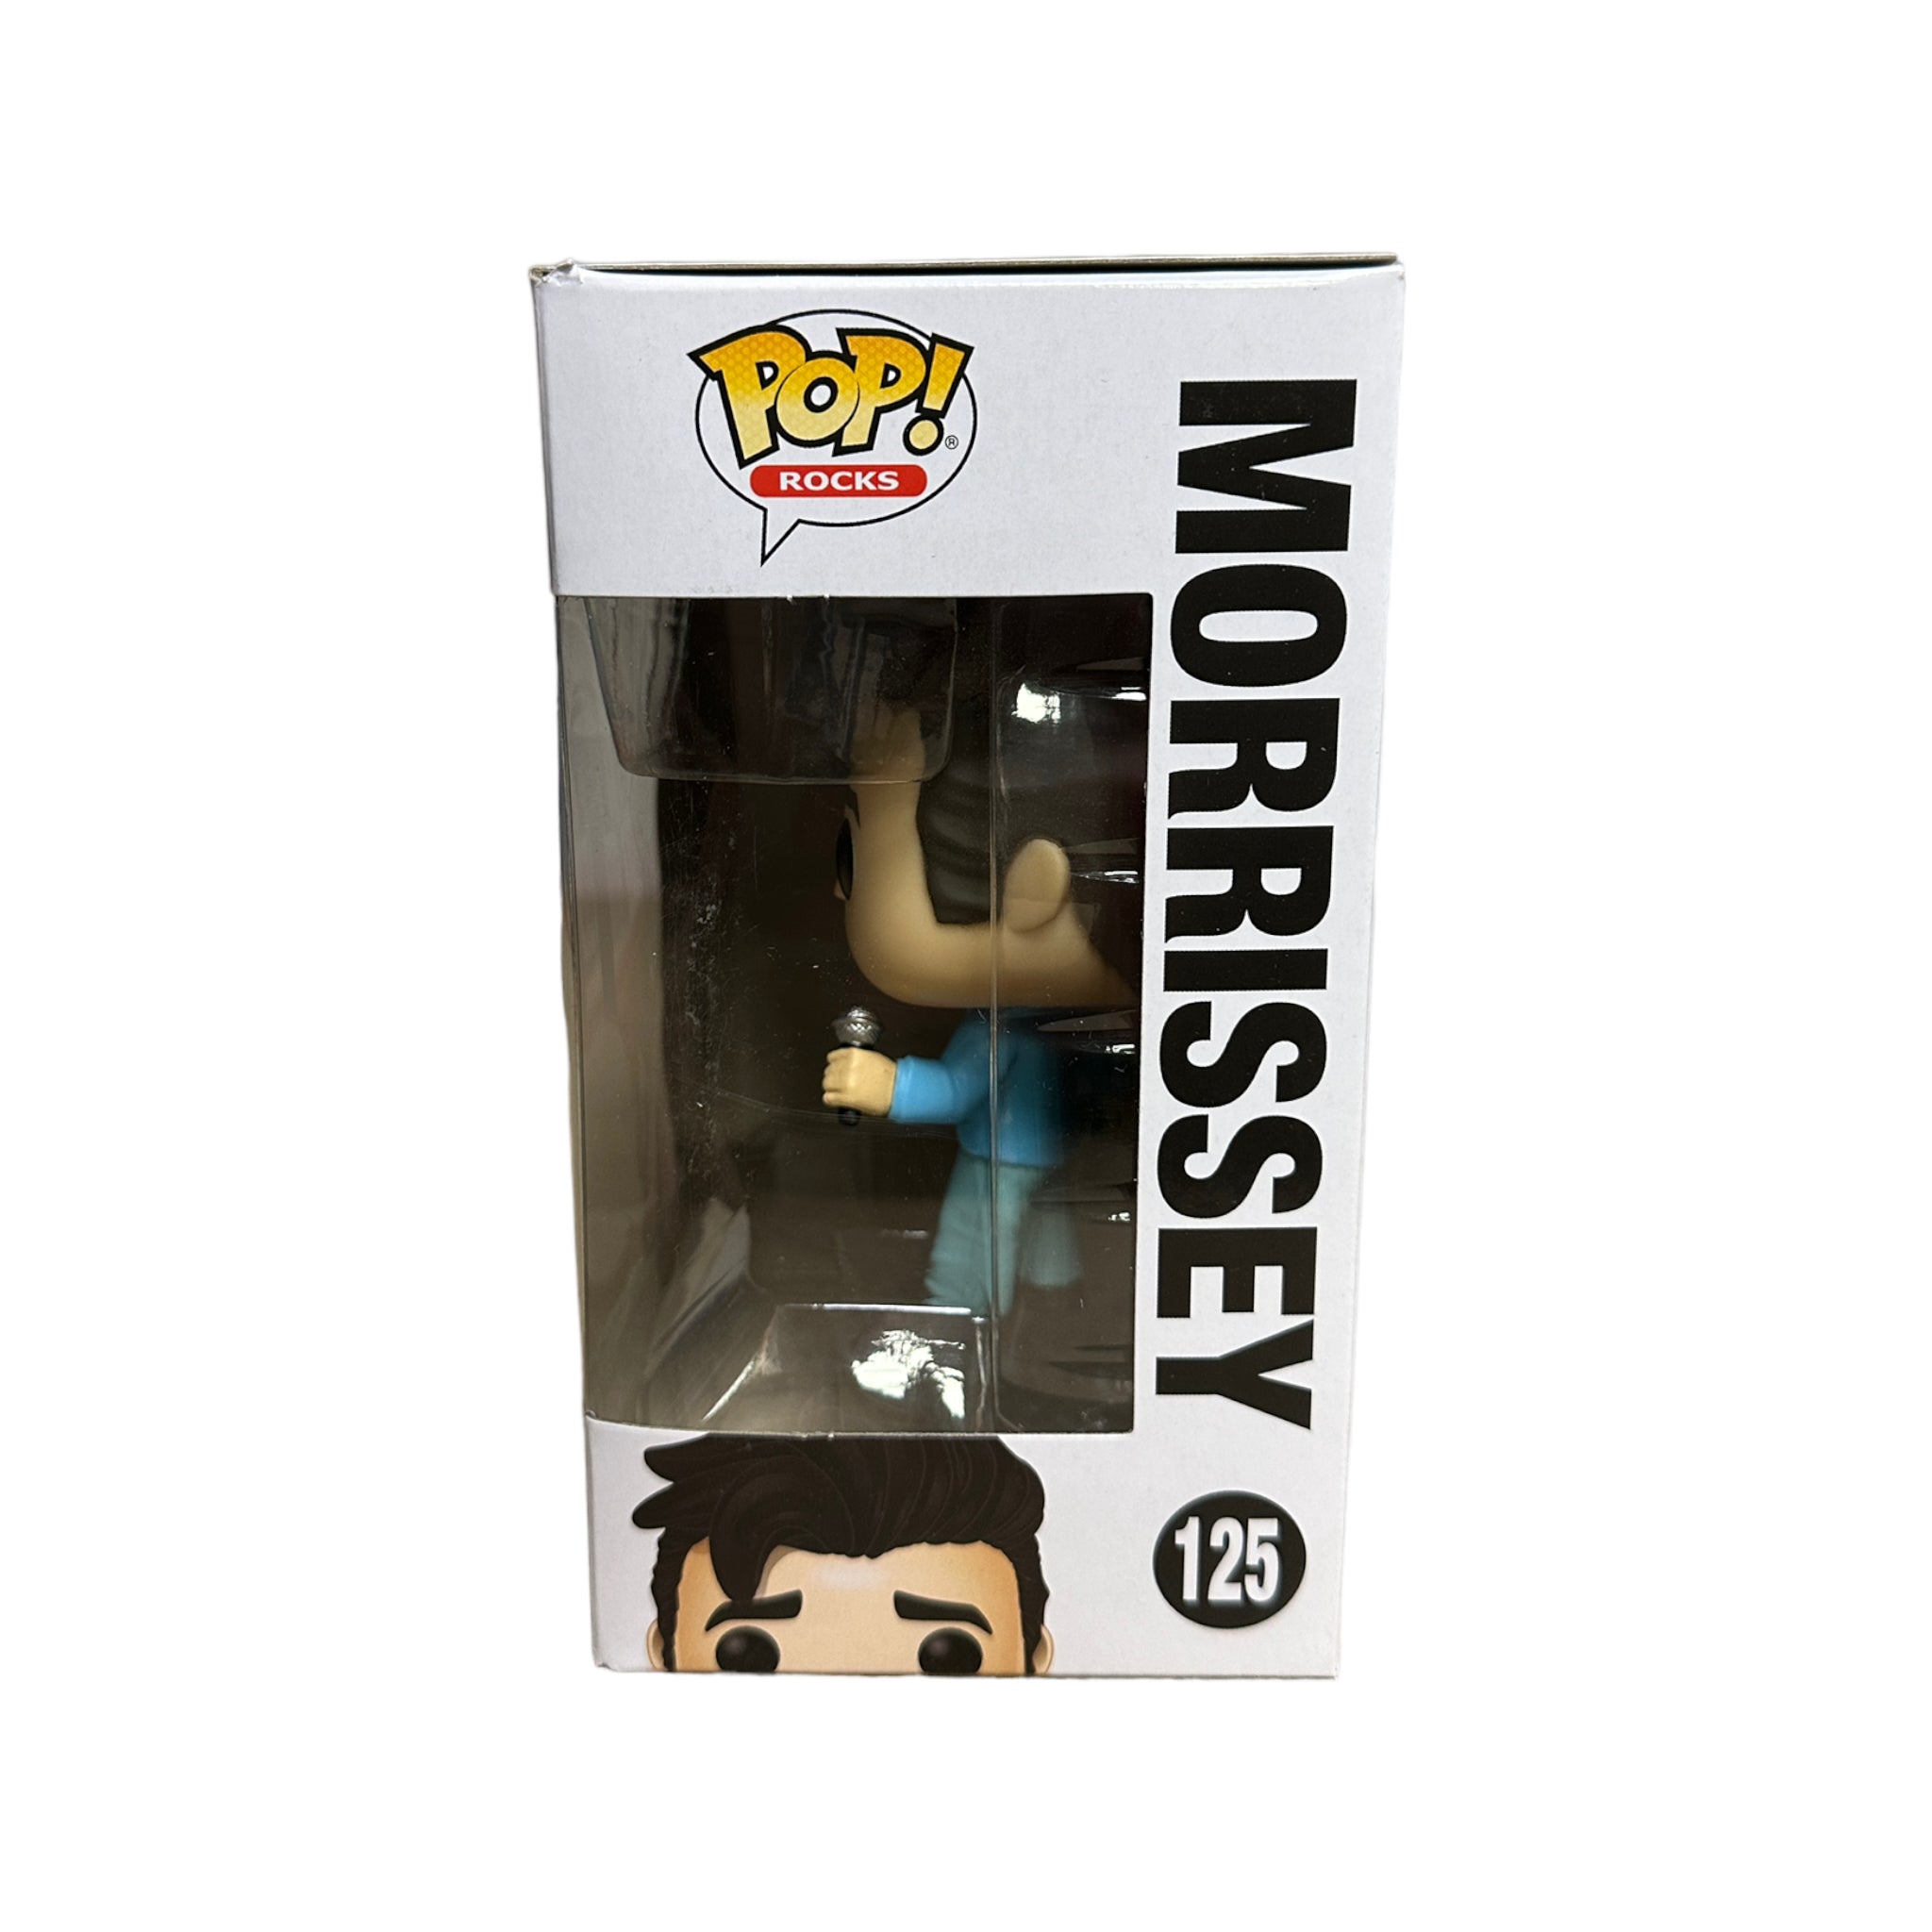 Morrissey #125 Funko Pop! - Rocks - 2019 Pop! - Condition 8/10